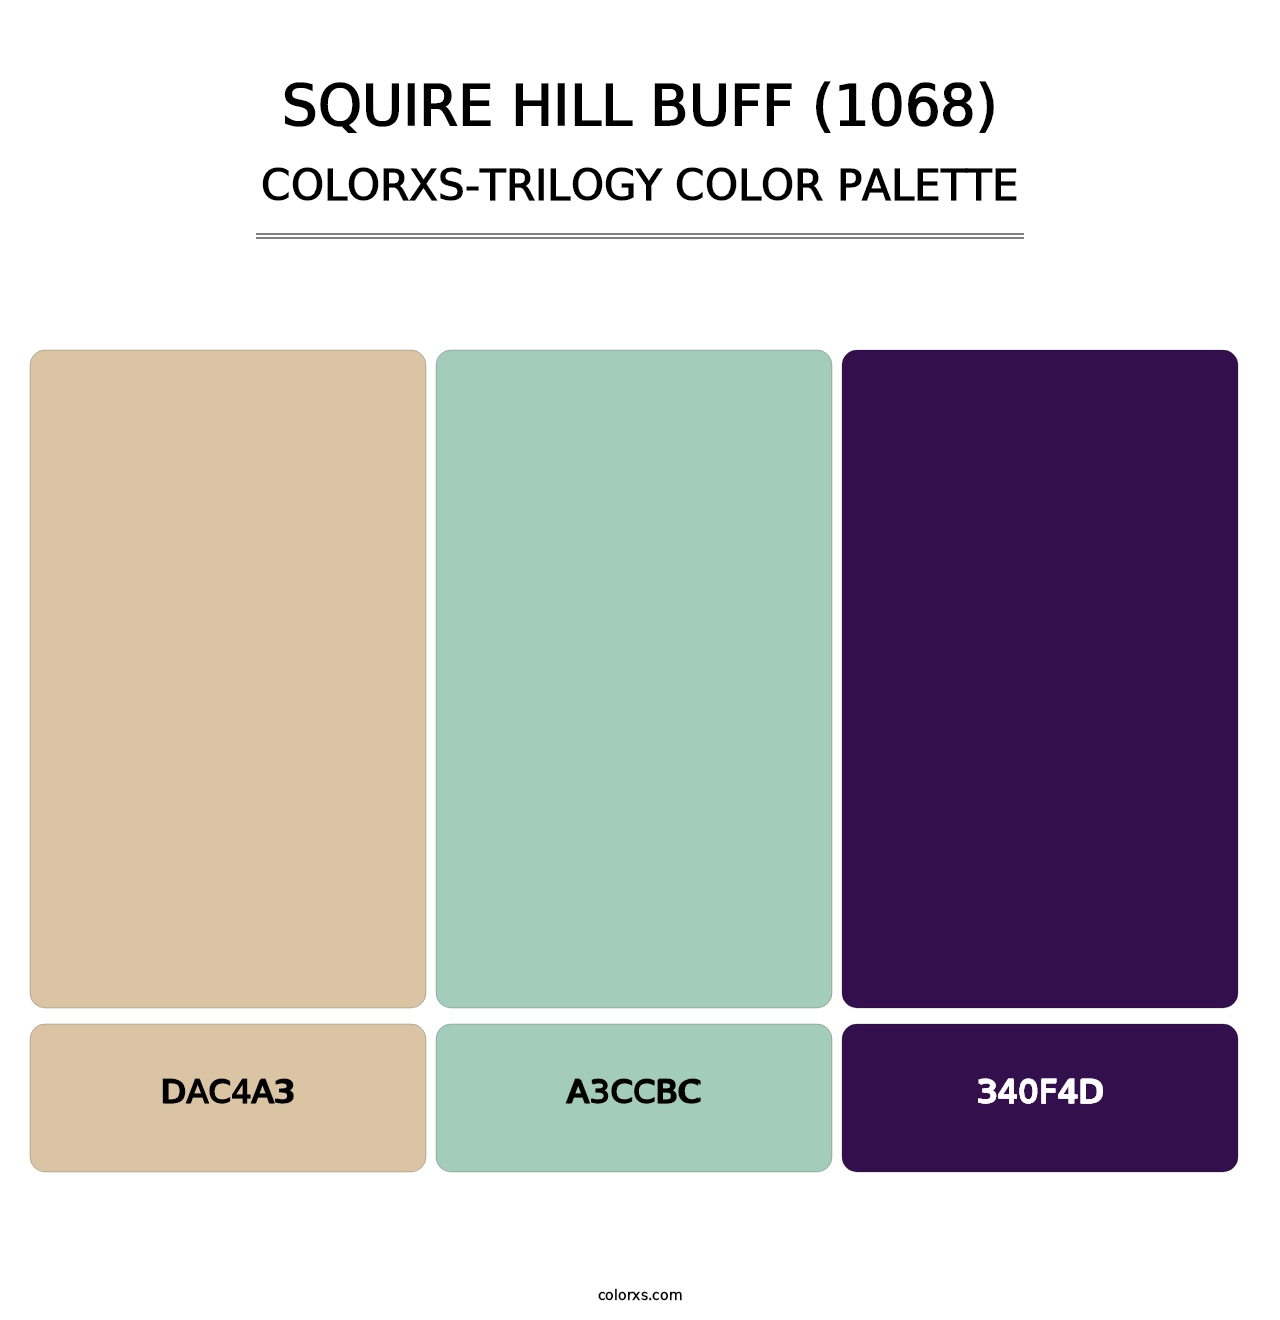 Squire Hill Buff (1068) - Colorxs Trilogy Palette